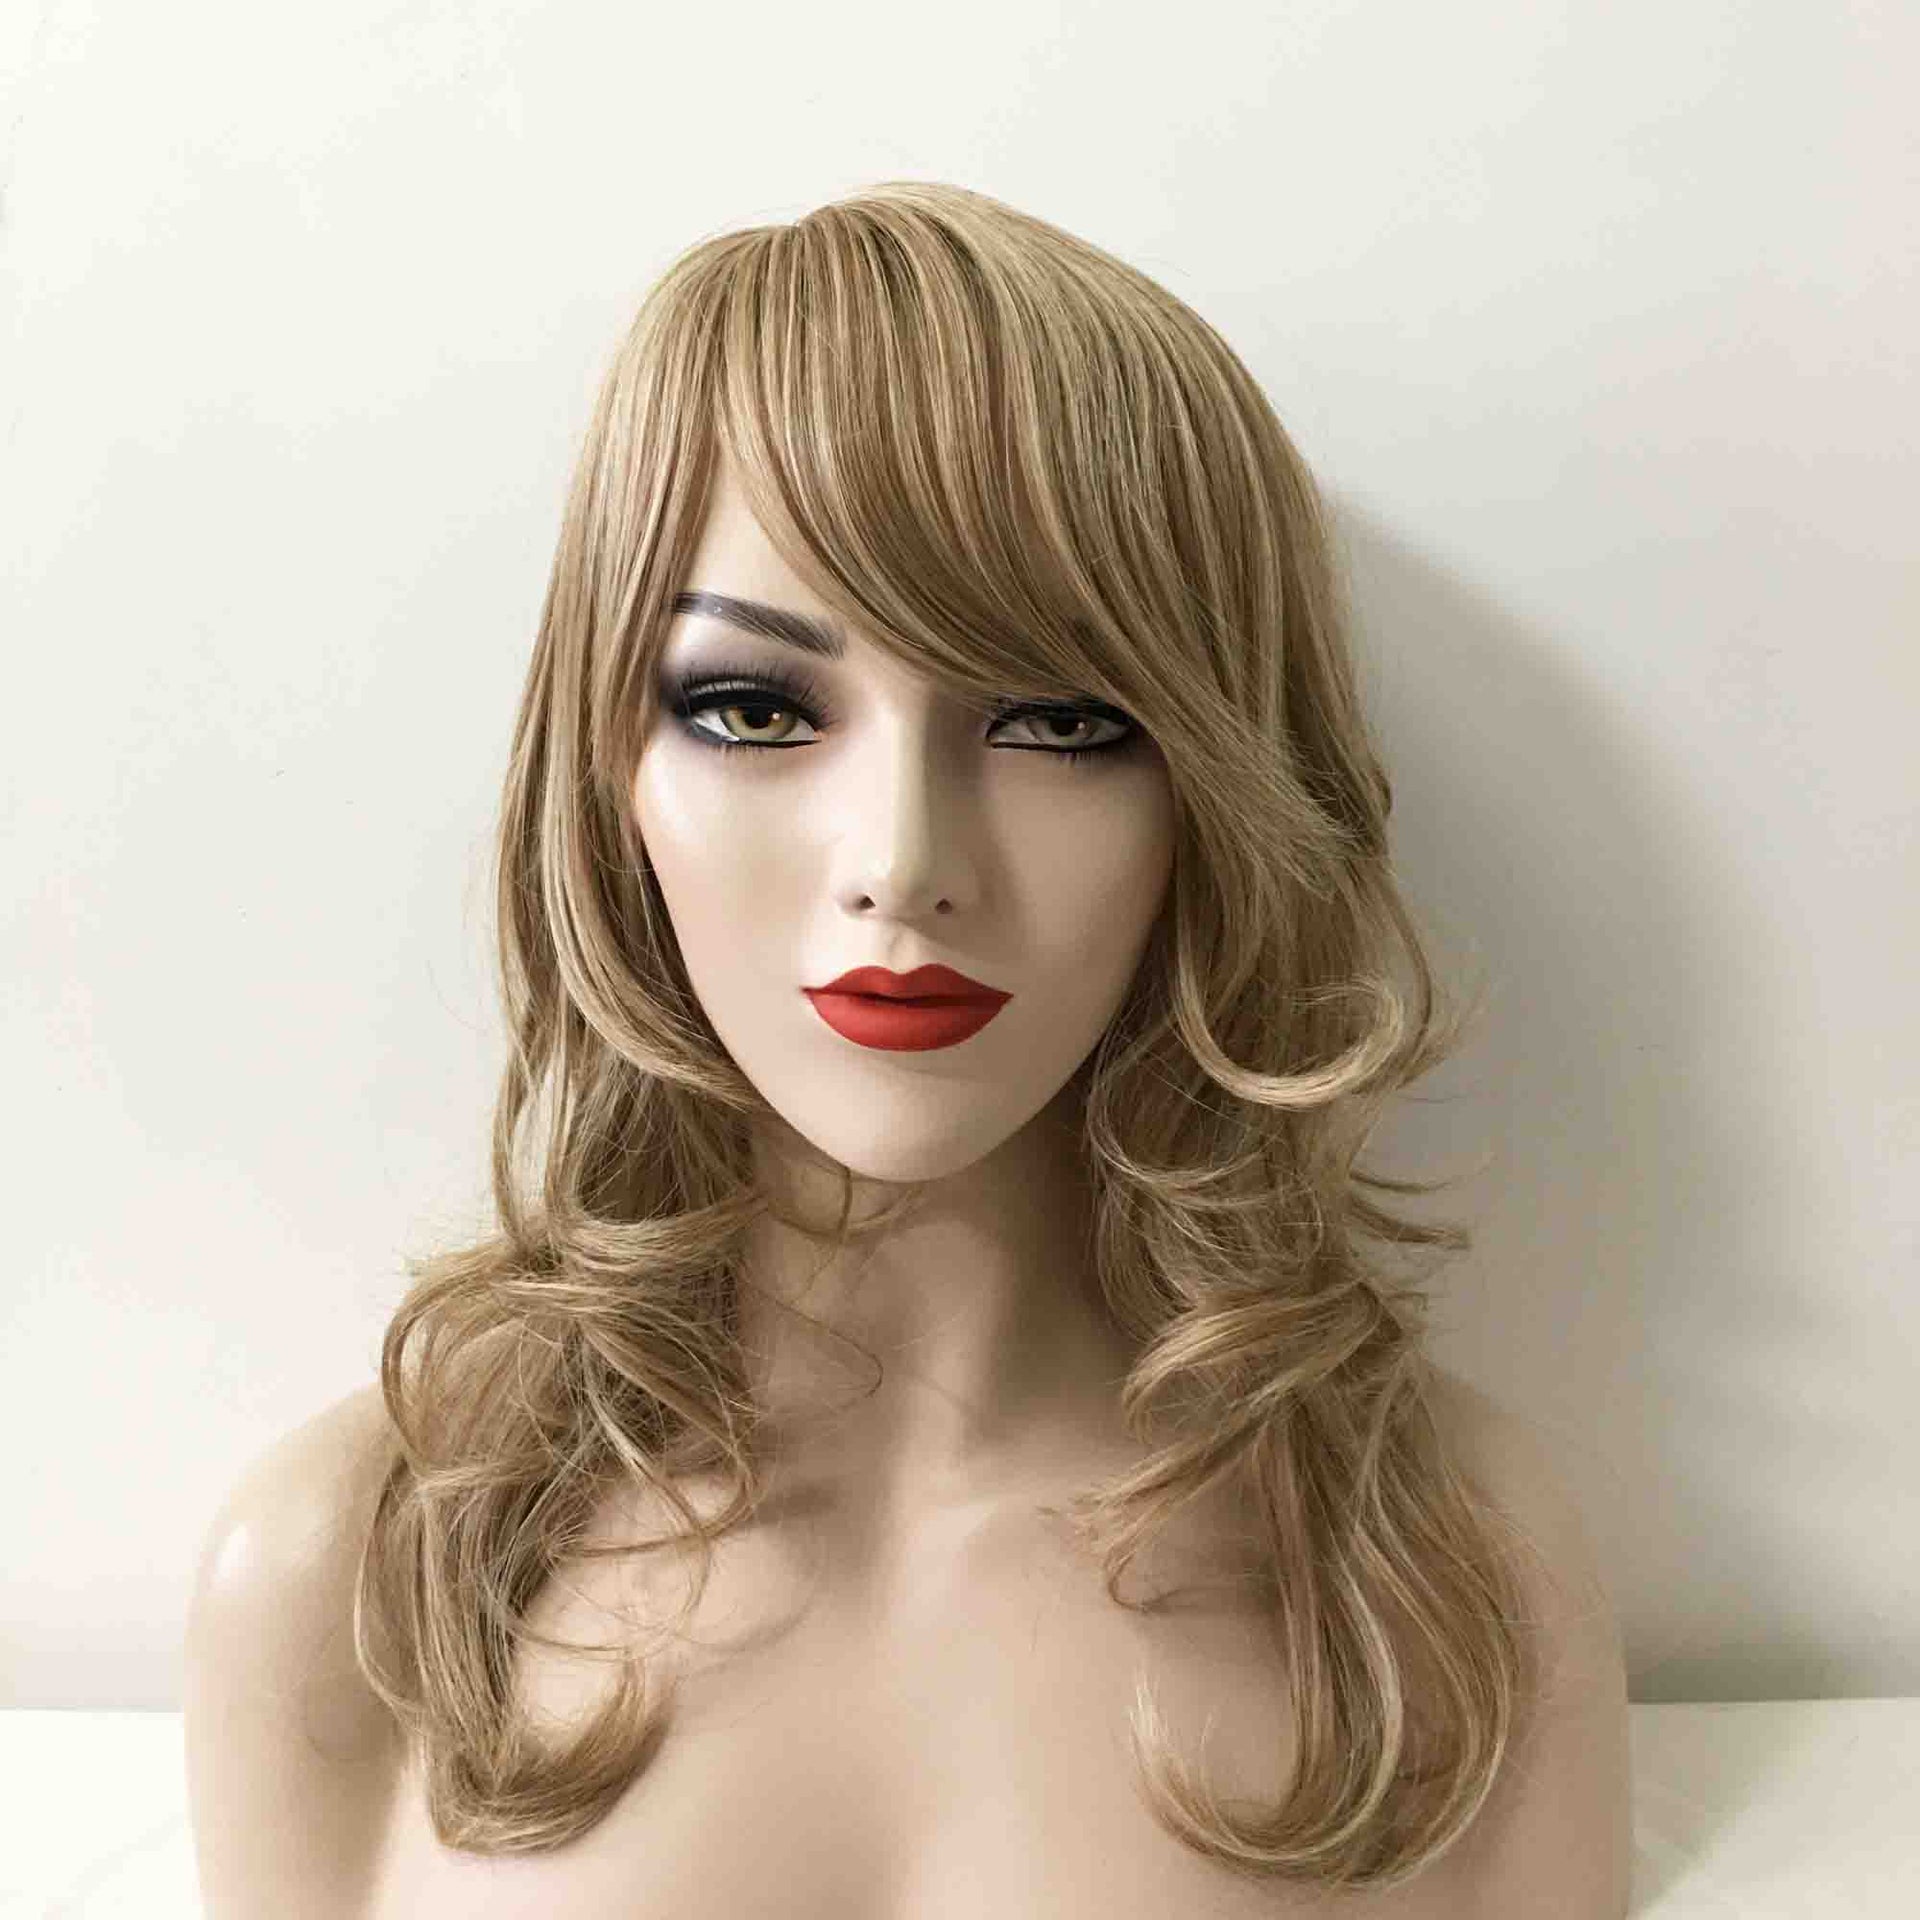 nevermindyrhead Women Ash Blonde Long Curly Side Part Fringe Bangs Layered Wig